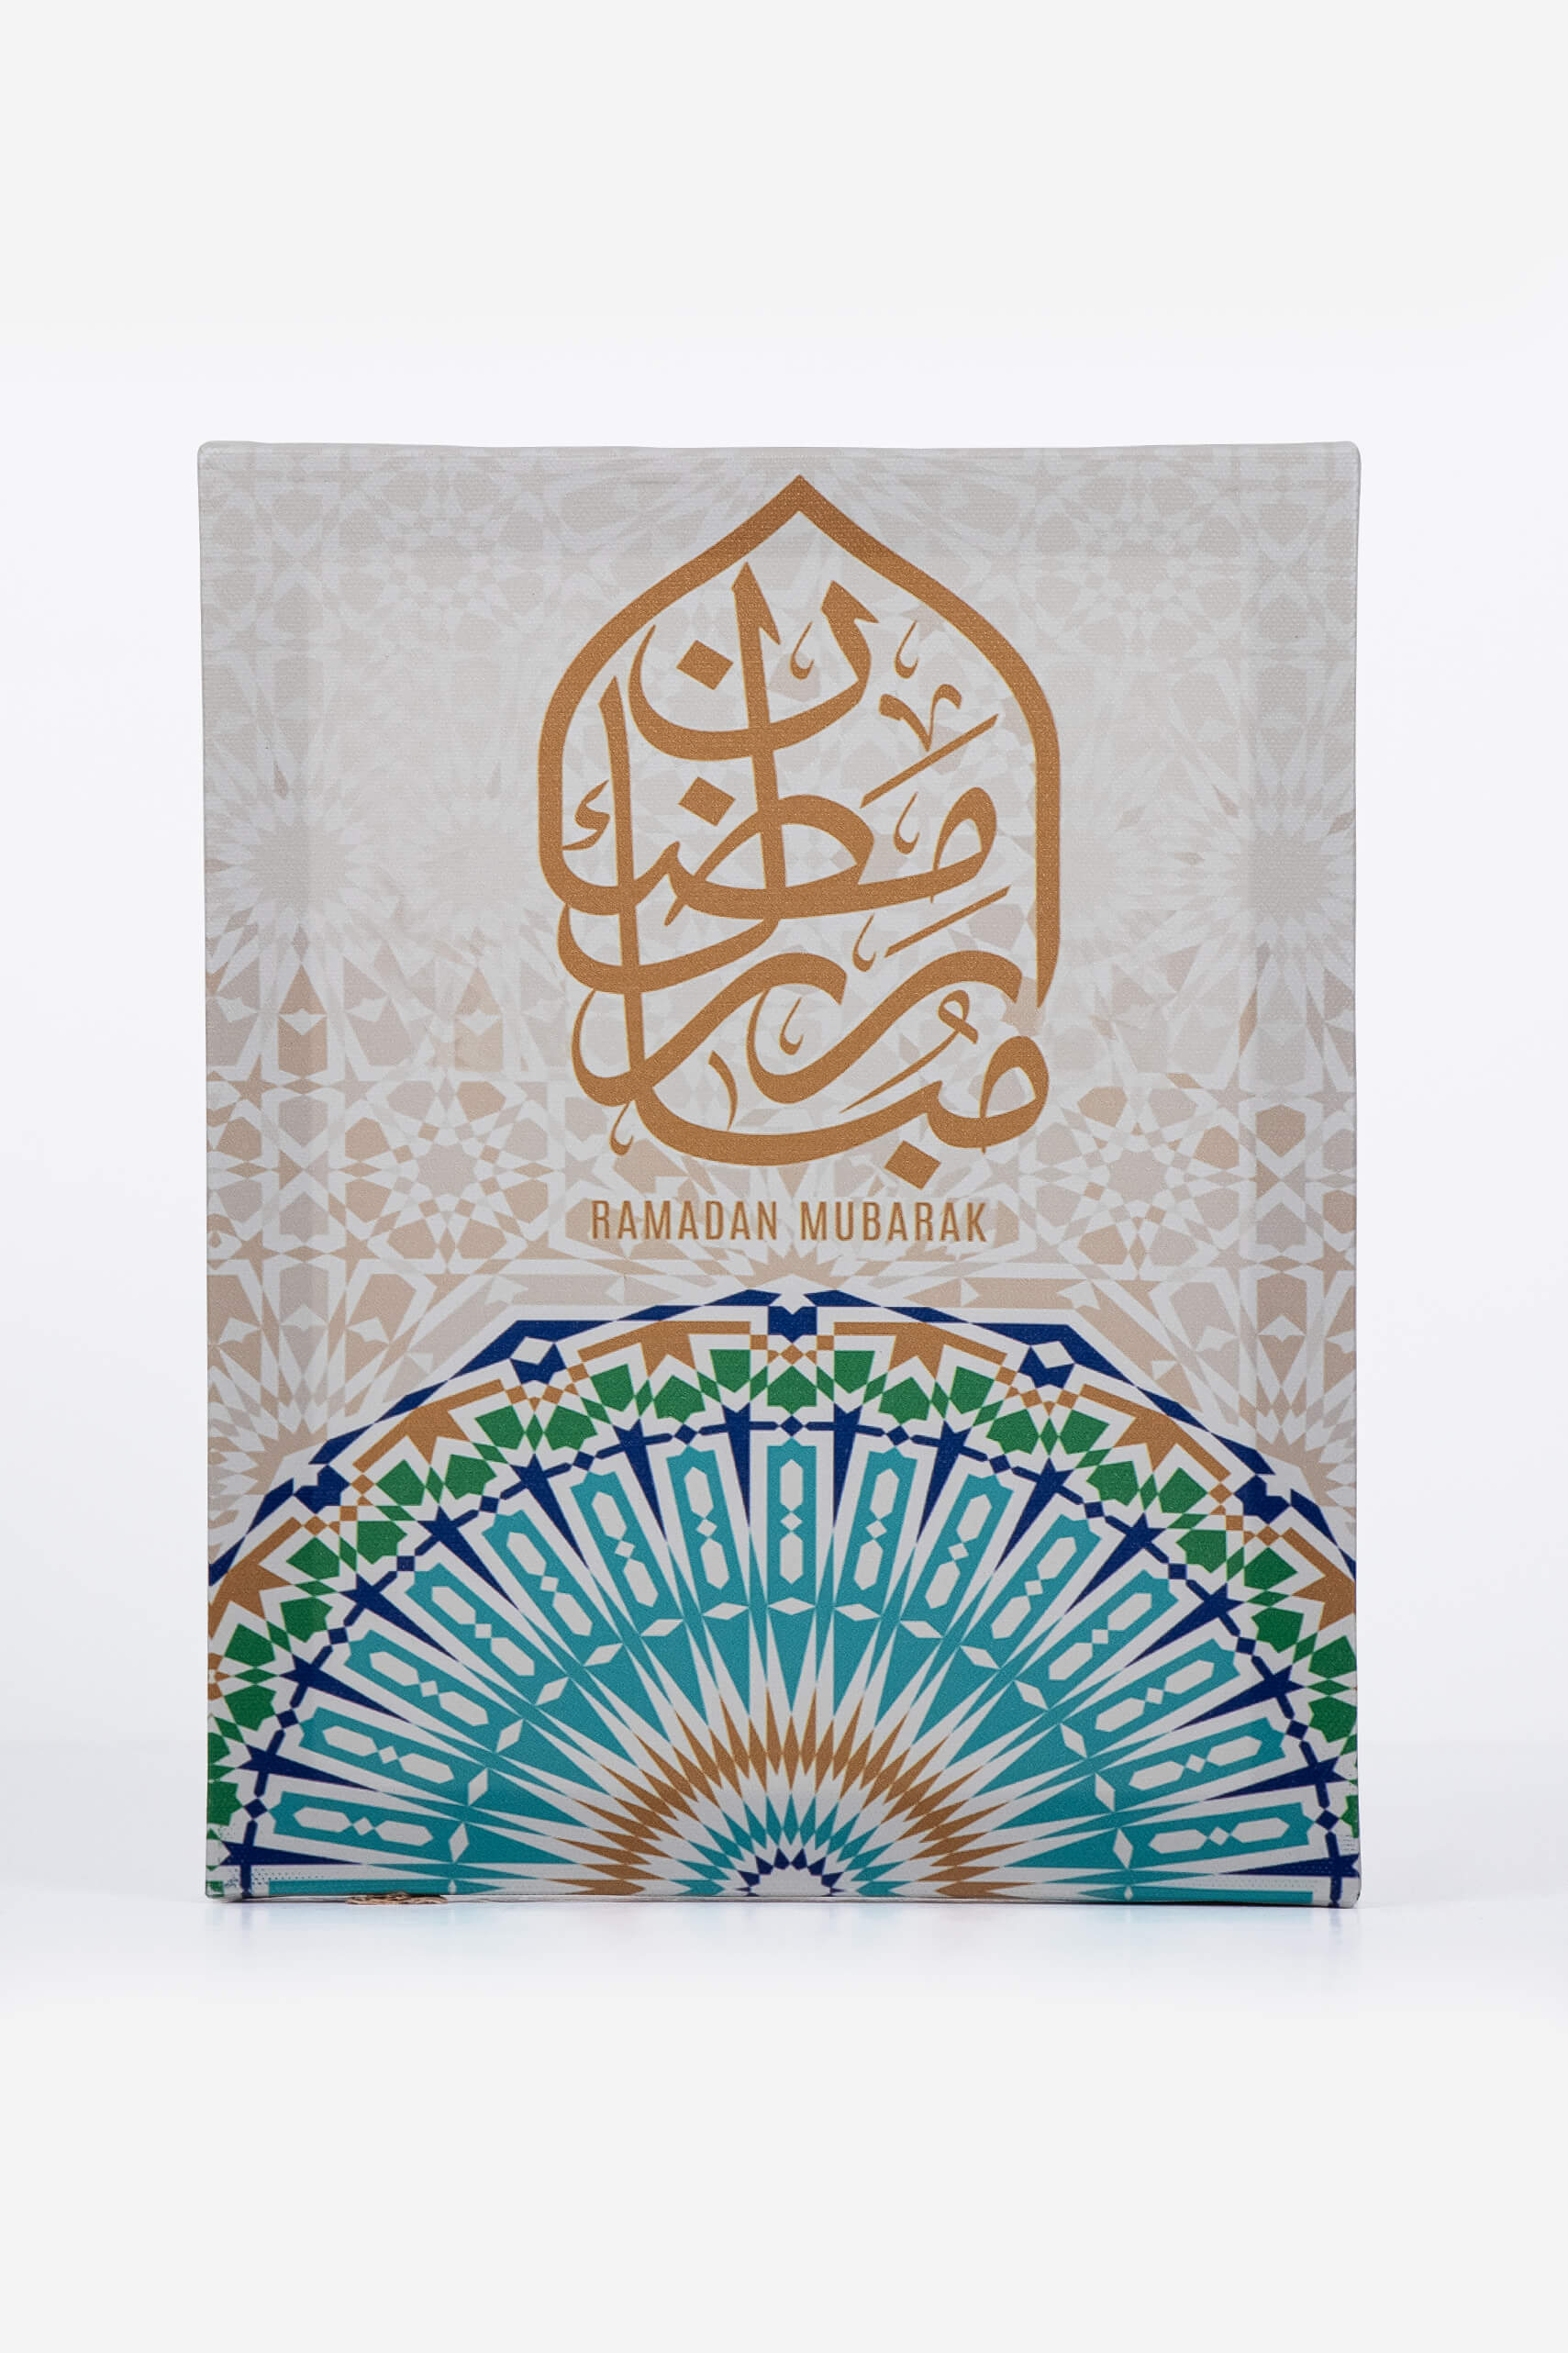 Ramadan Mubarak Off-White Canvas - Other - Muslim Lifestyle Store